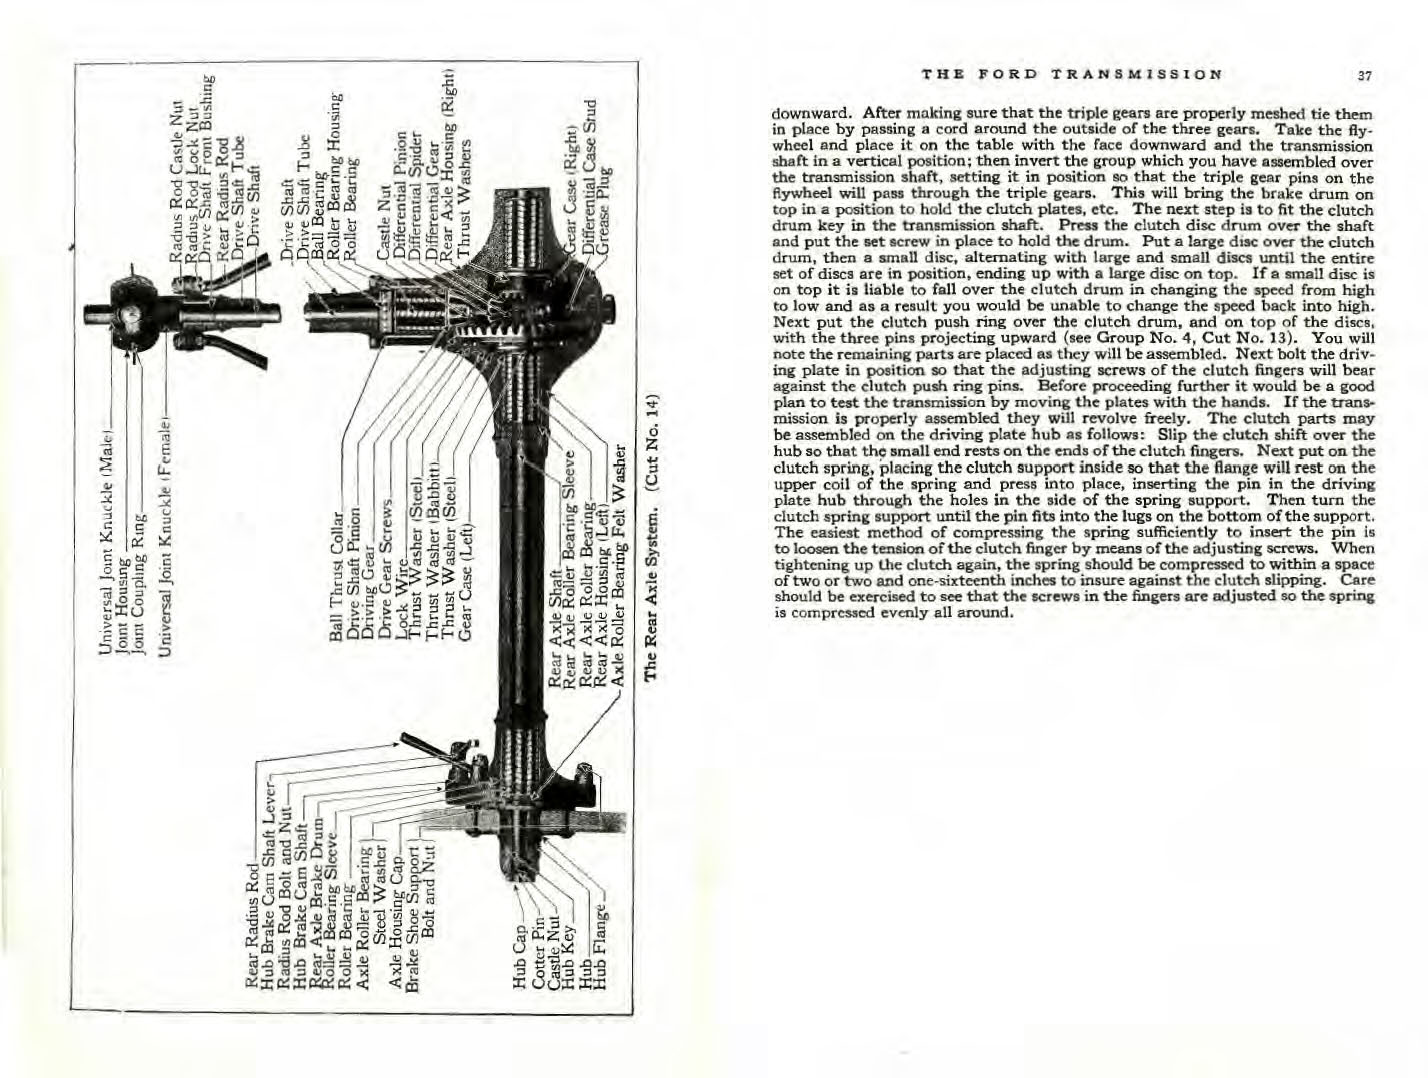 n_1922 Ford Manual-36-37.jpg